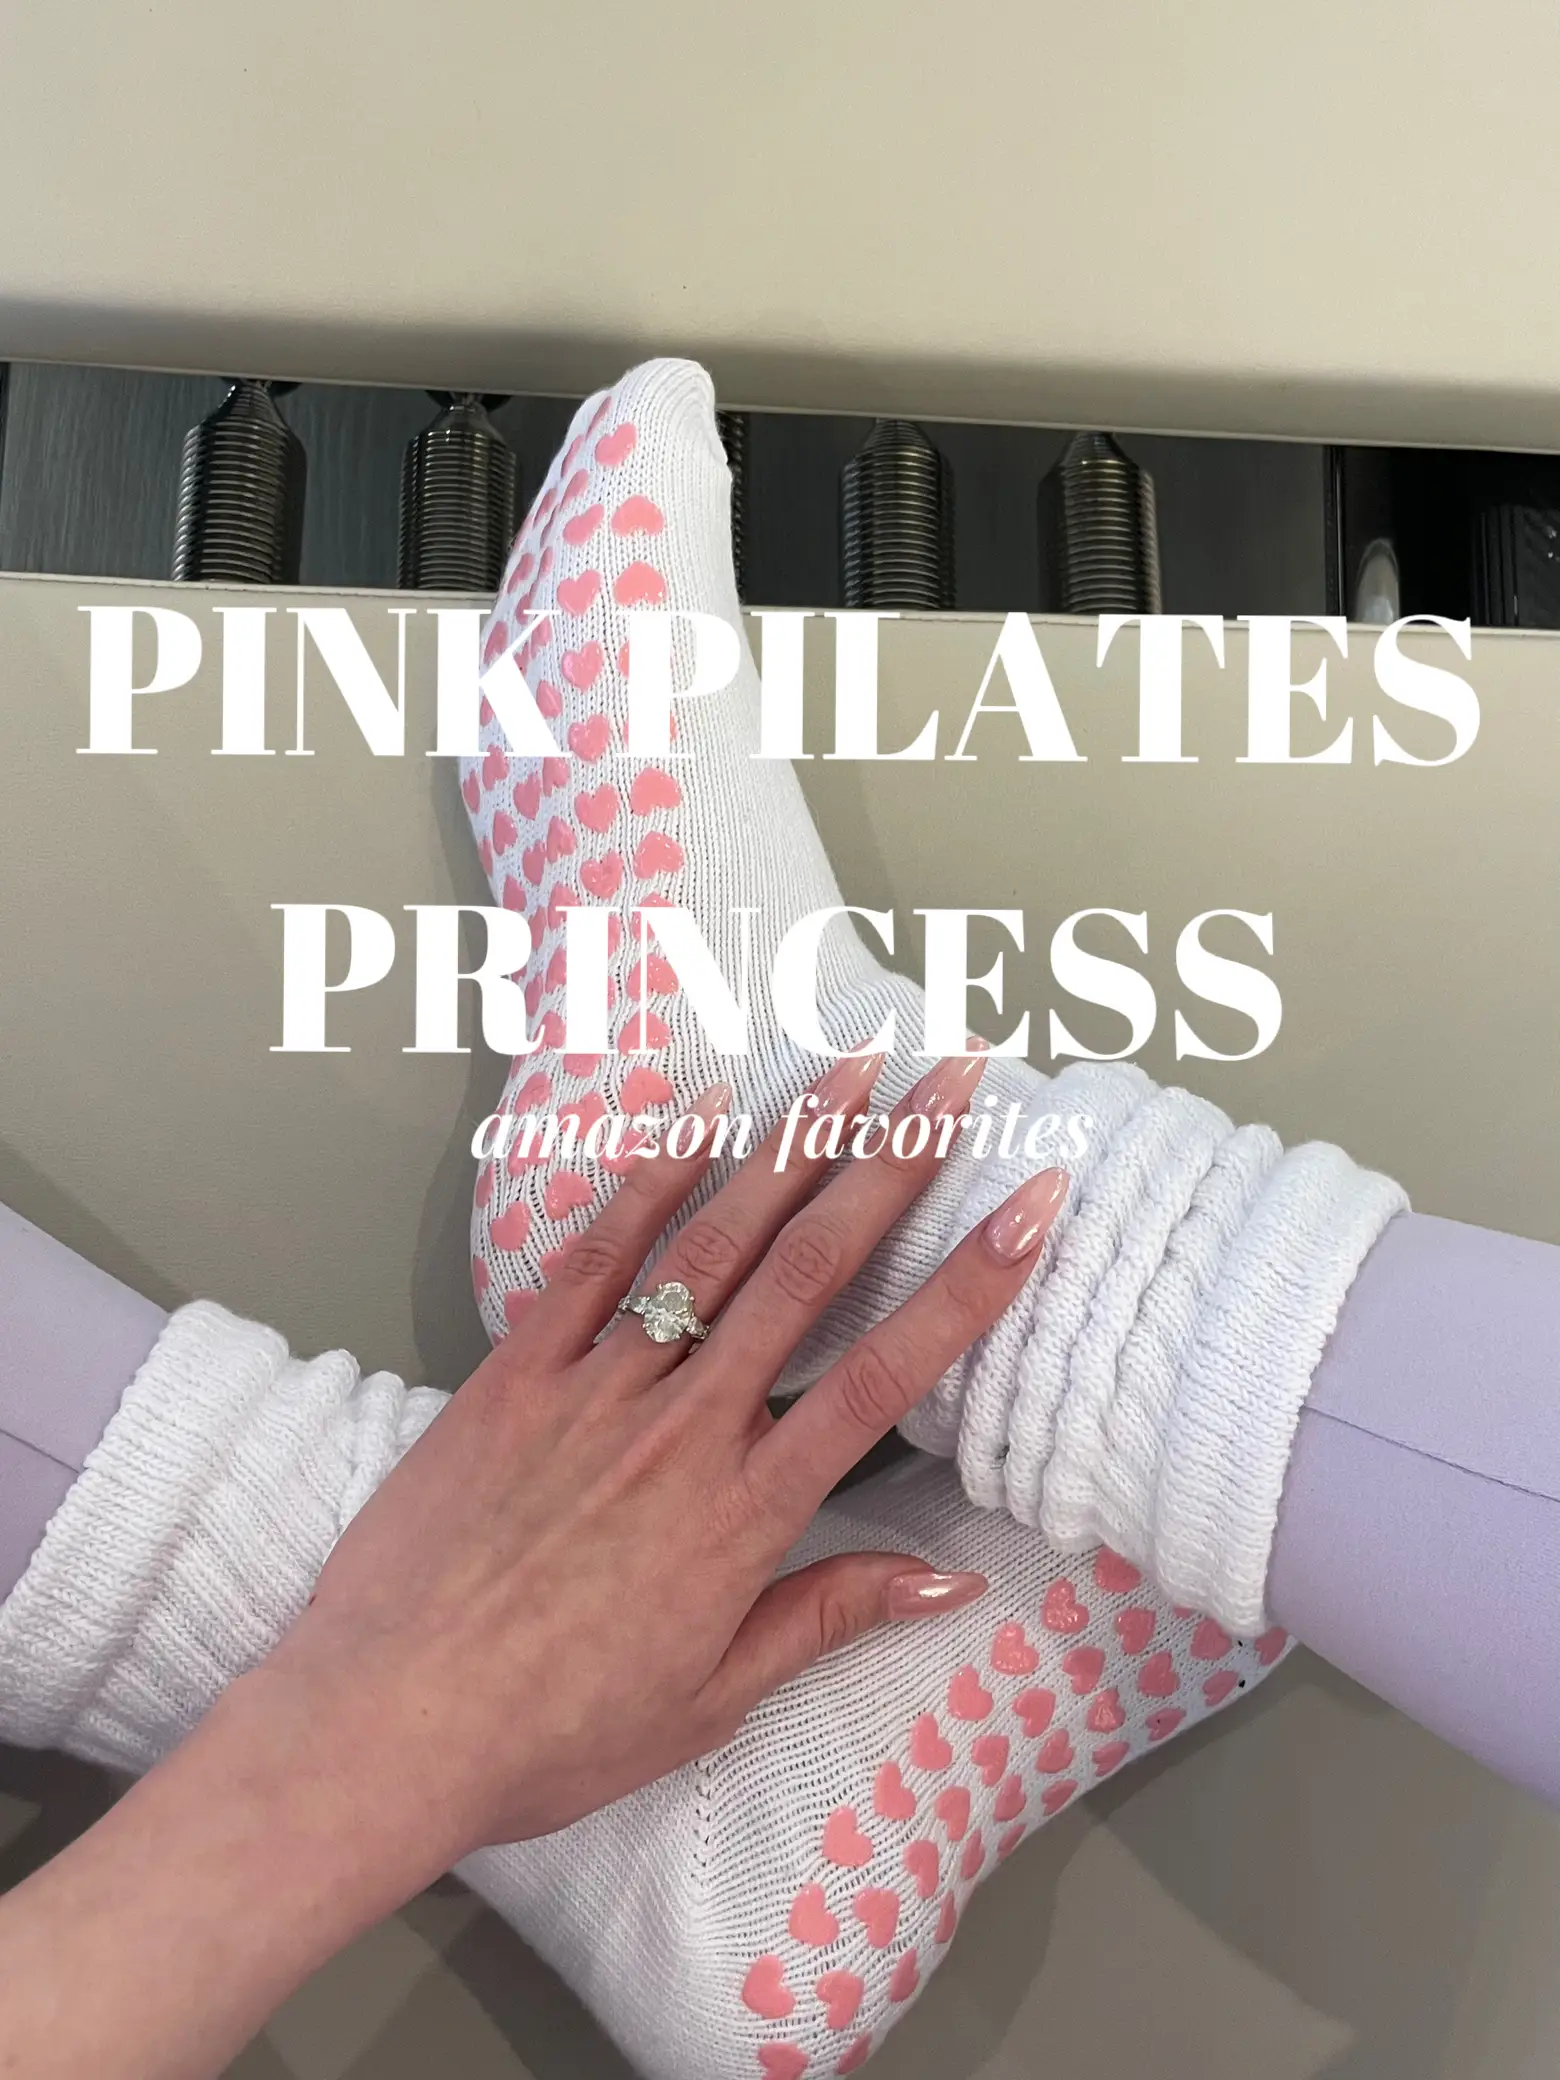 Pink pilates princess wishlist :) #pinkpilatesprincess #coquette #doll